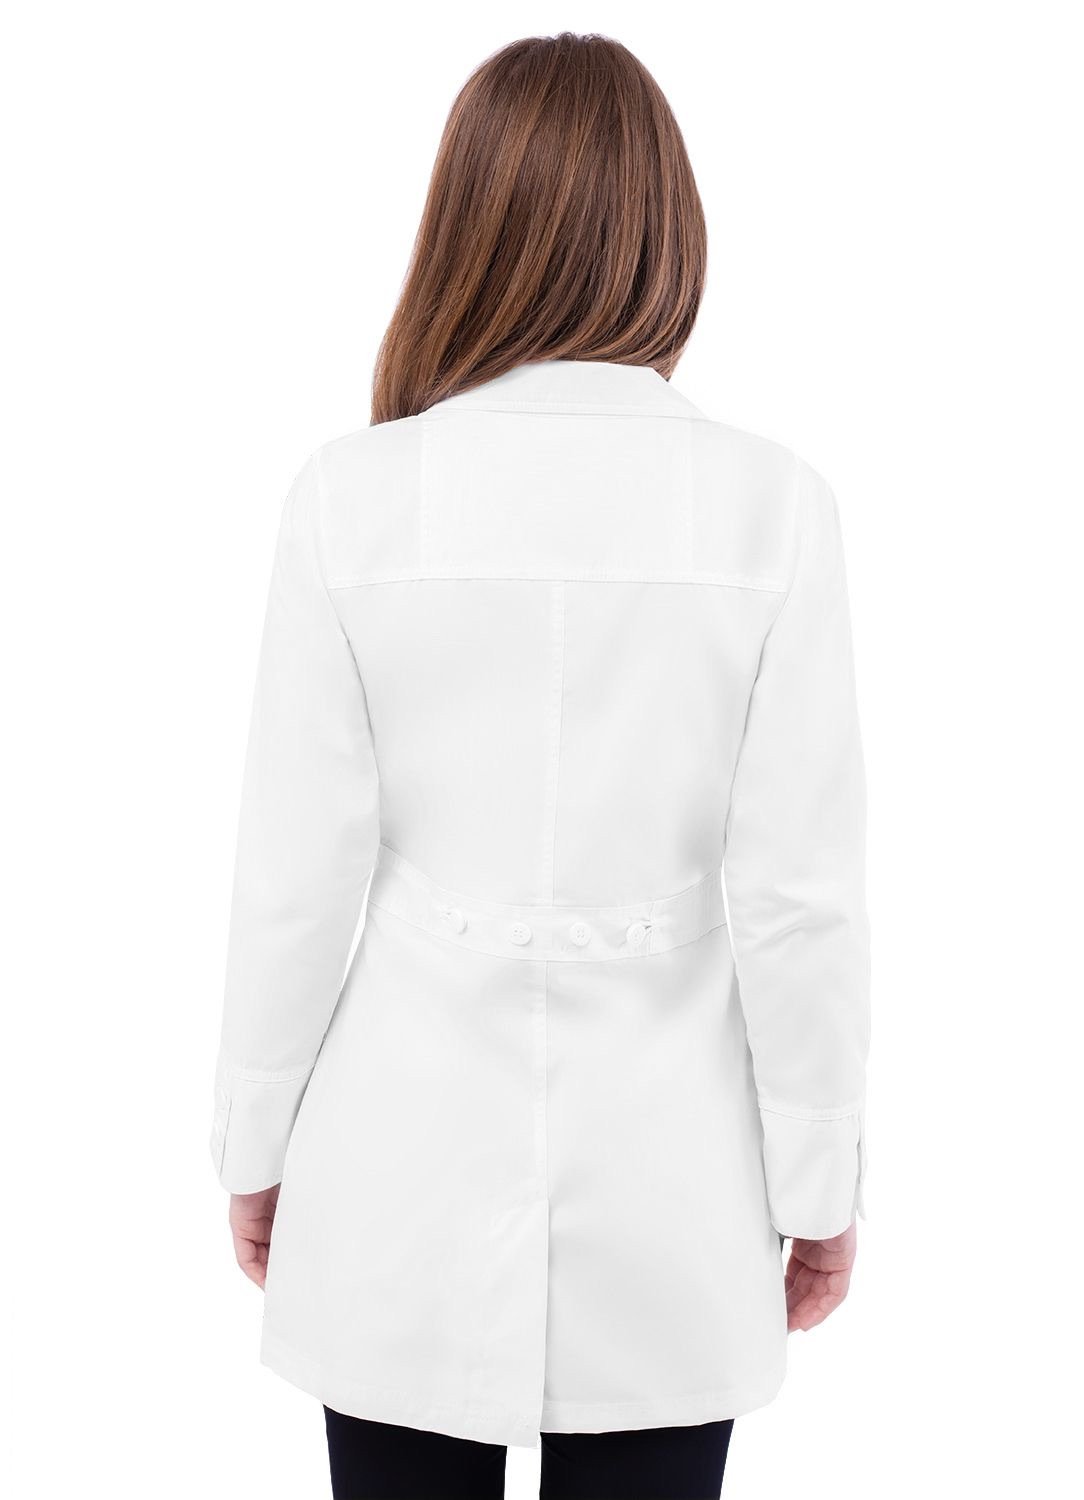 Women's 32" Perfection Lab Coat by Adar XXS-5XL / BLACK